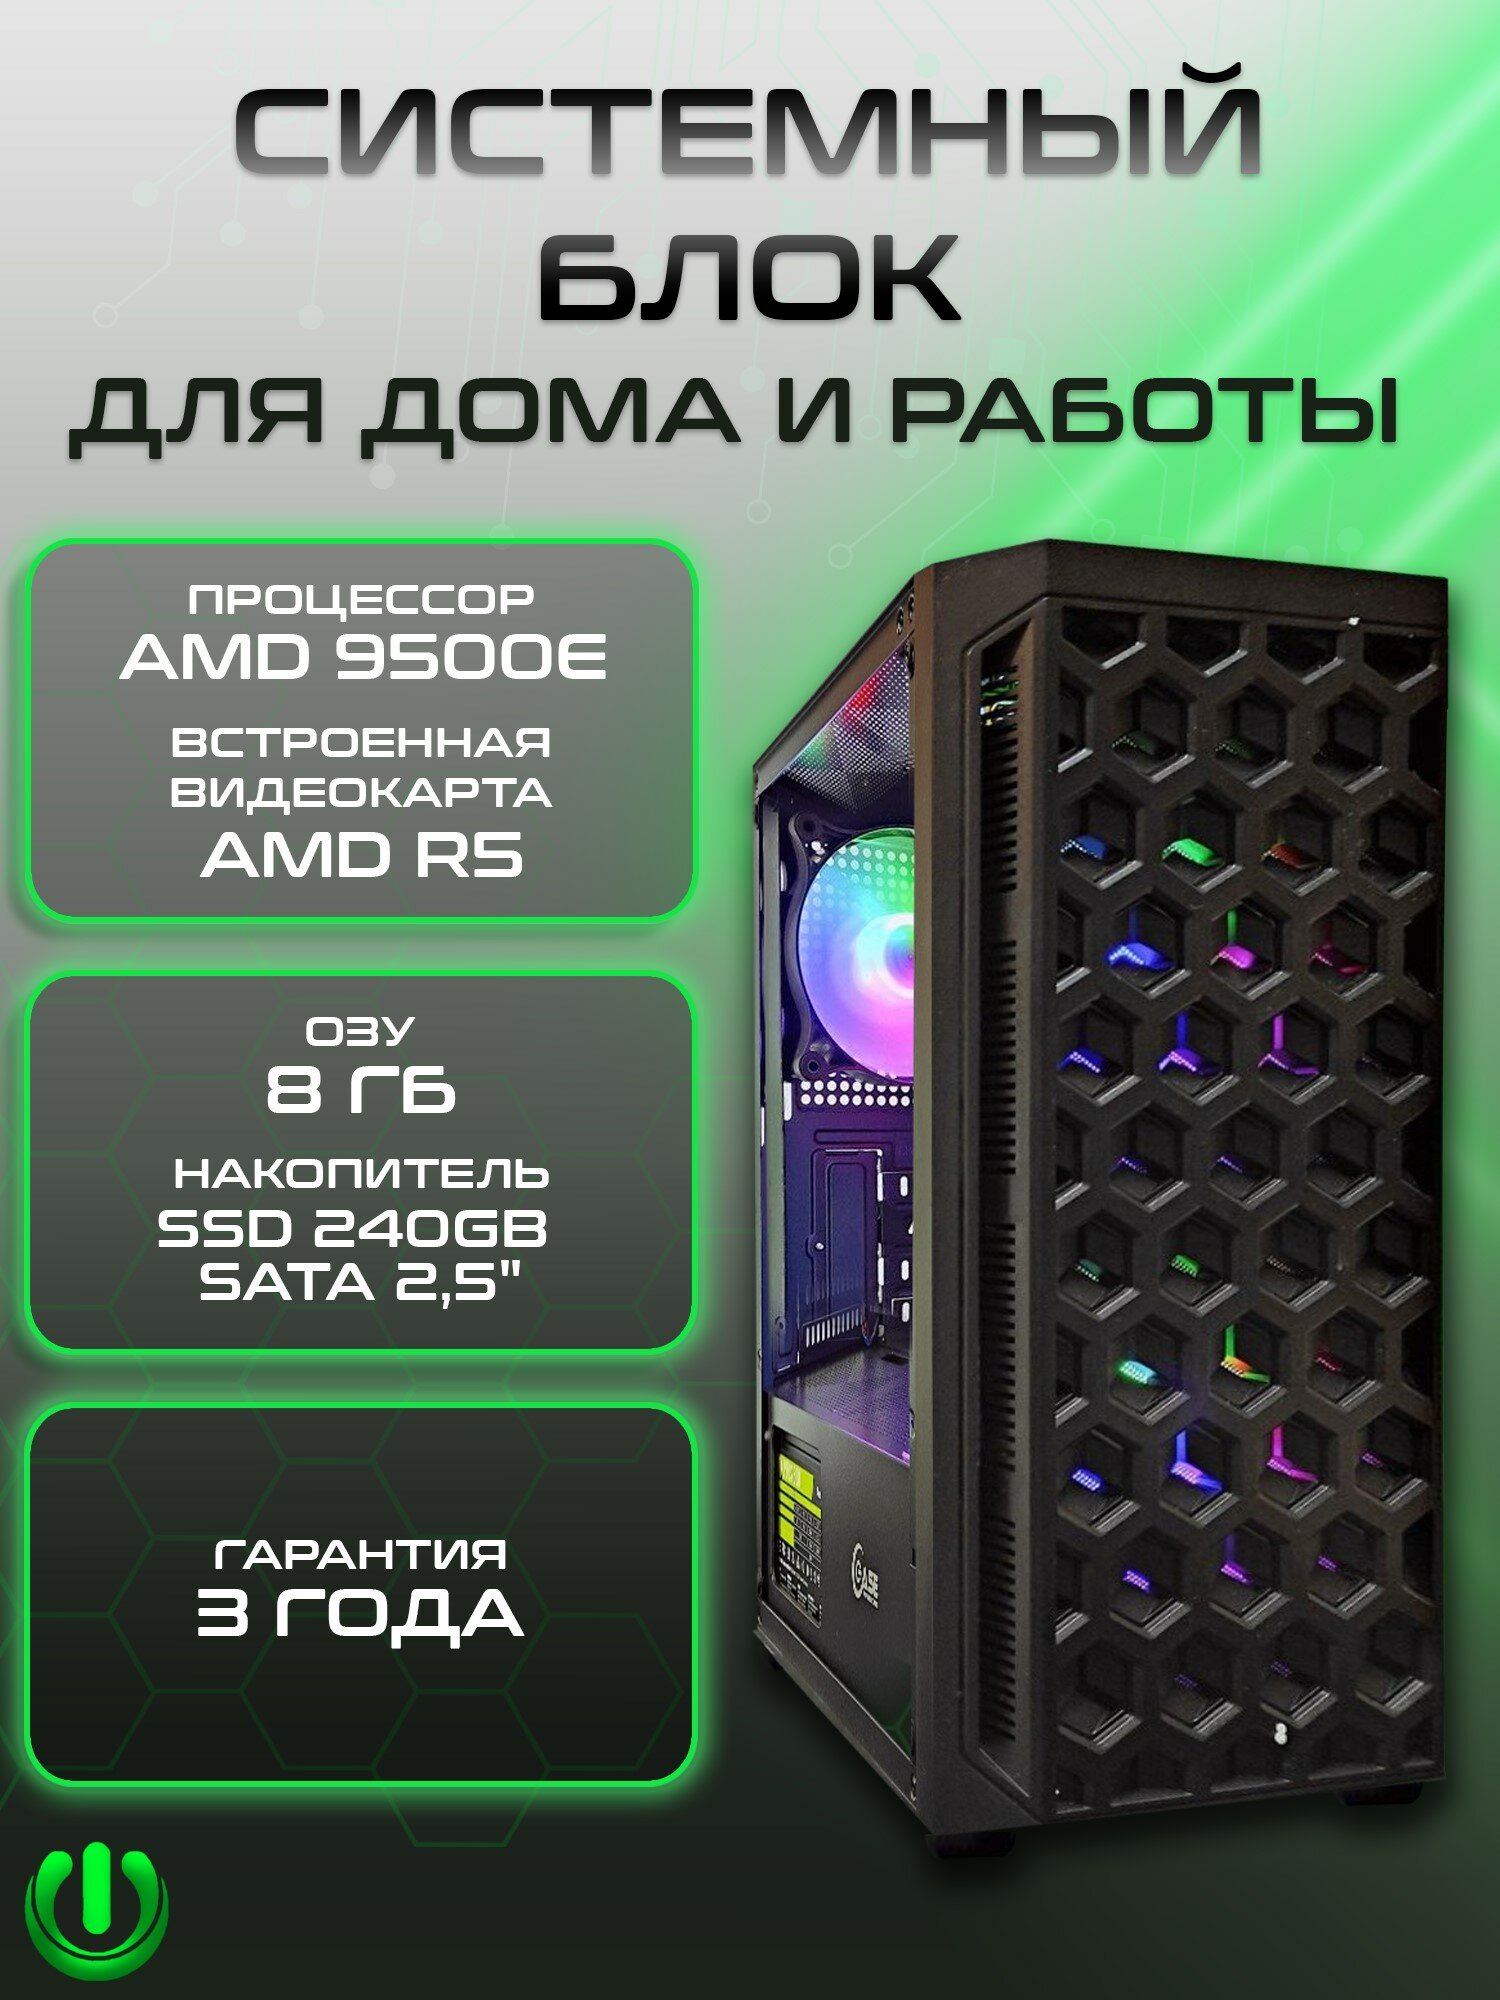 Системный блок PREON Storm Neo 9 (AMD A6 9500E, AMD A320M,8Gb DDR4, SSD 240Gb, AMD Radeon R5,450W, Windows10 PRO)